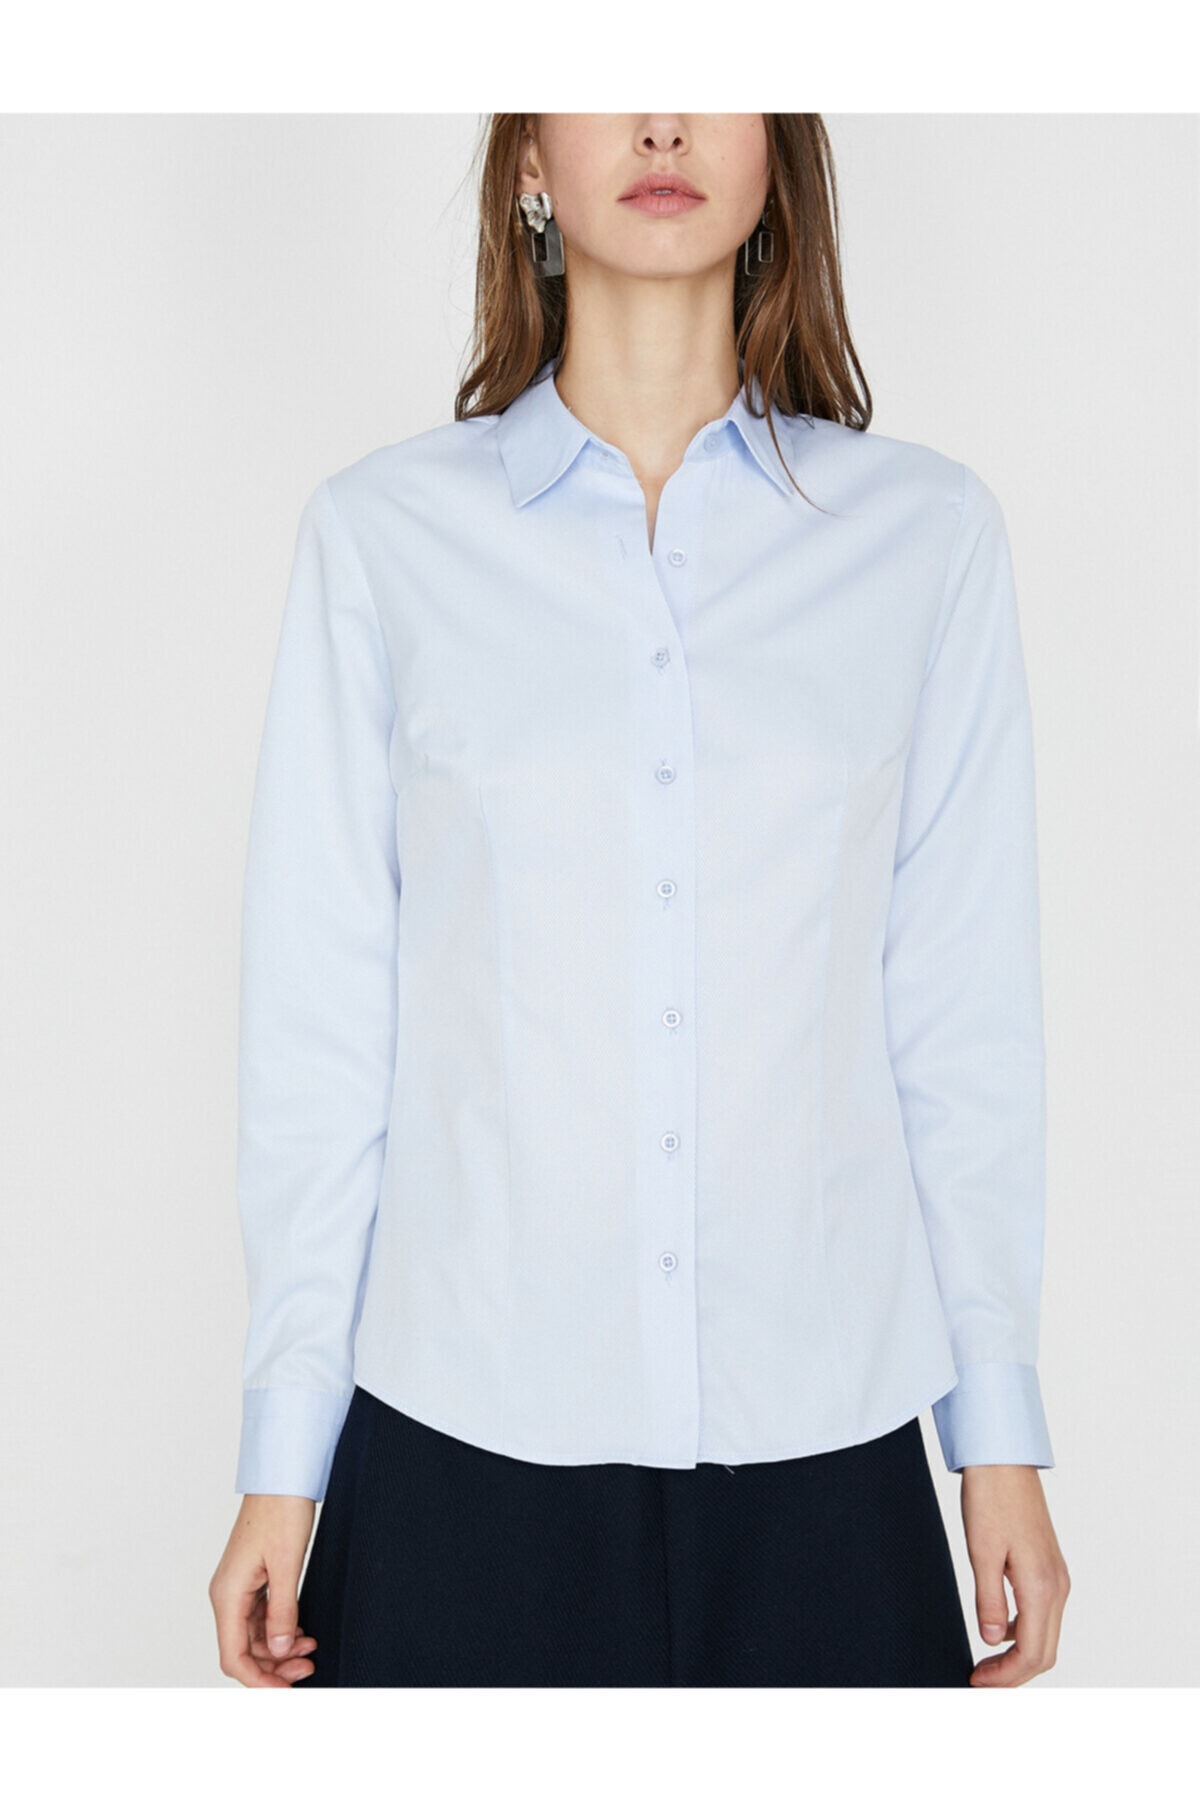 Koton Hemd Blau Regular Fit Fast ausverkauft QV7629